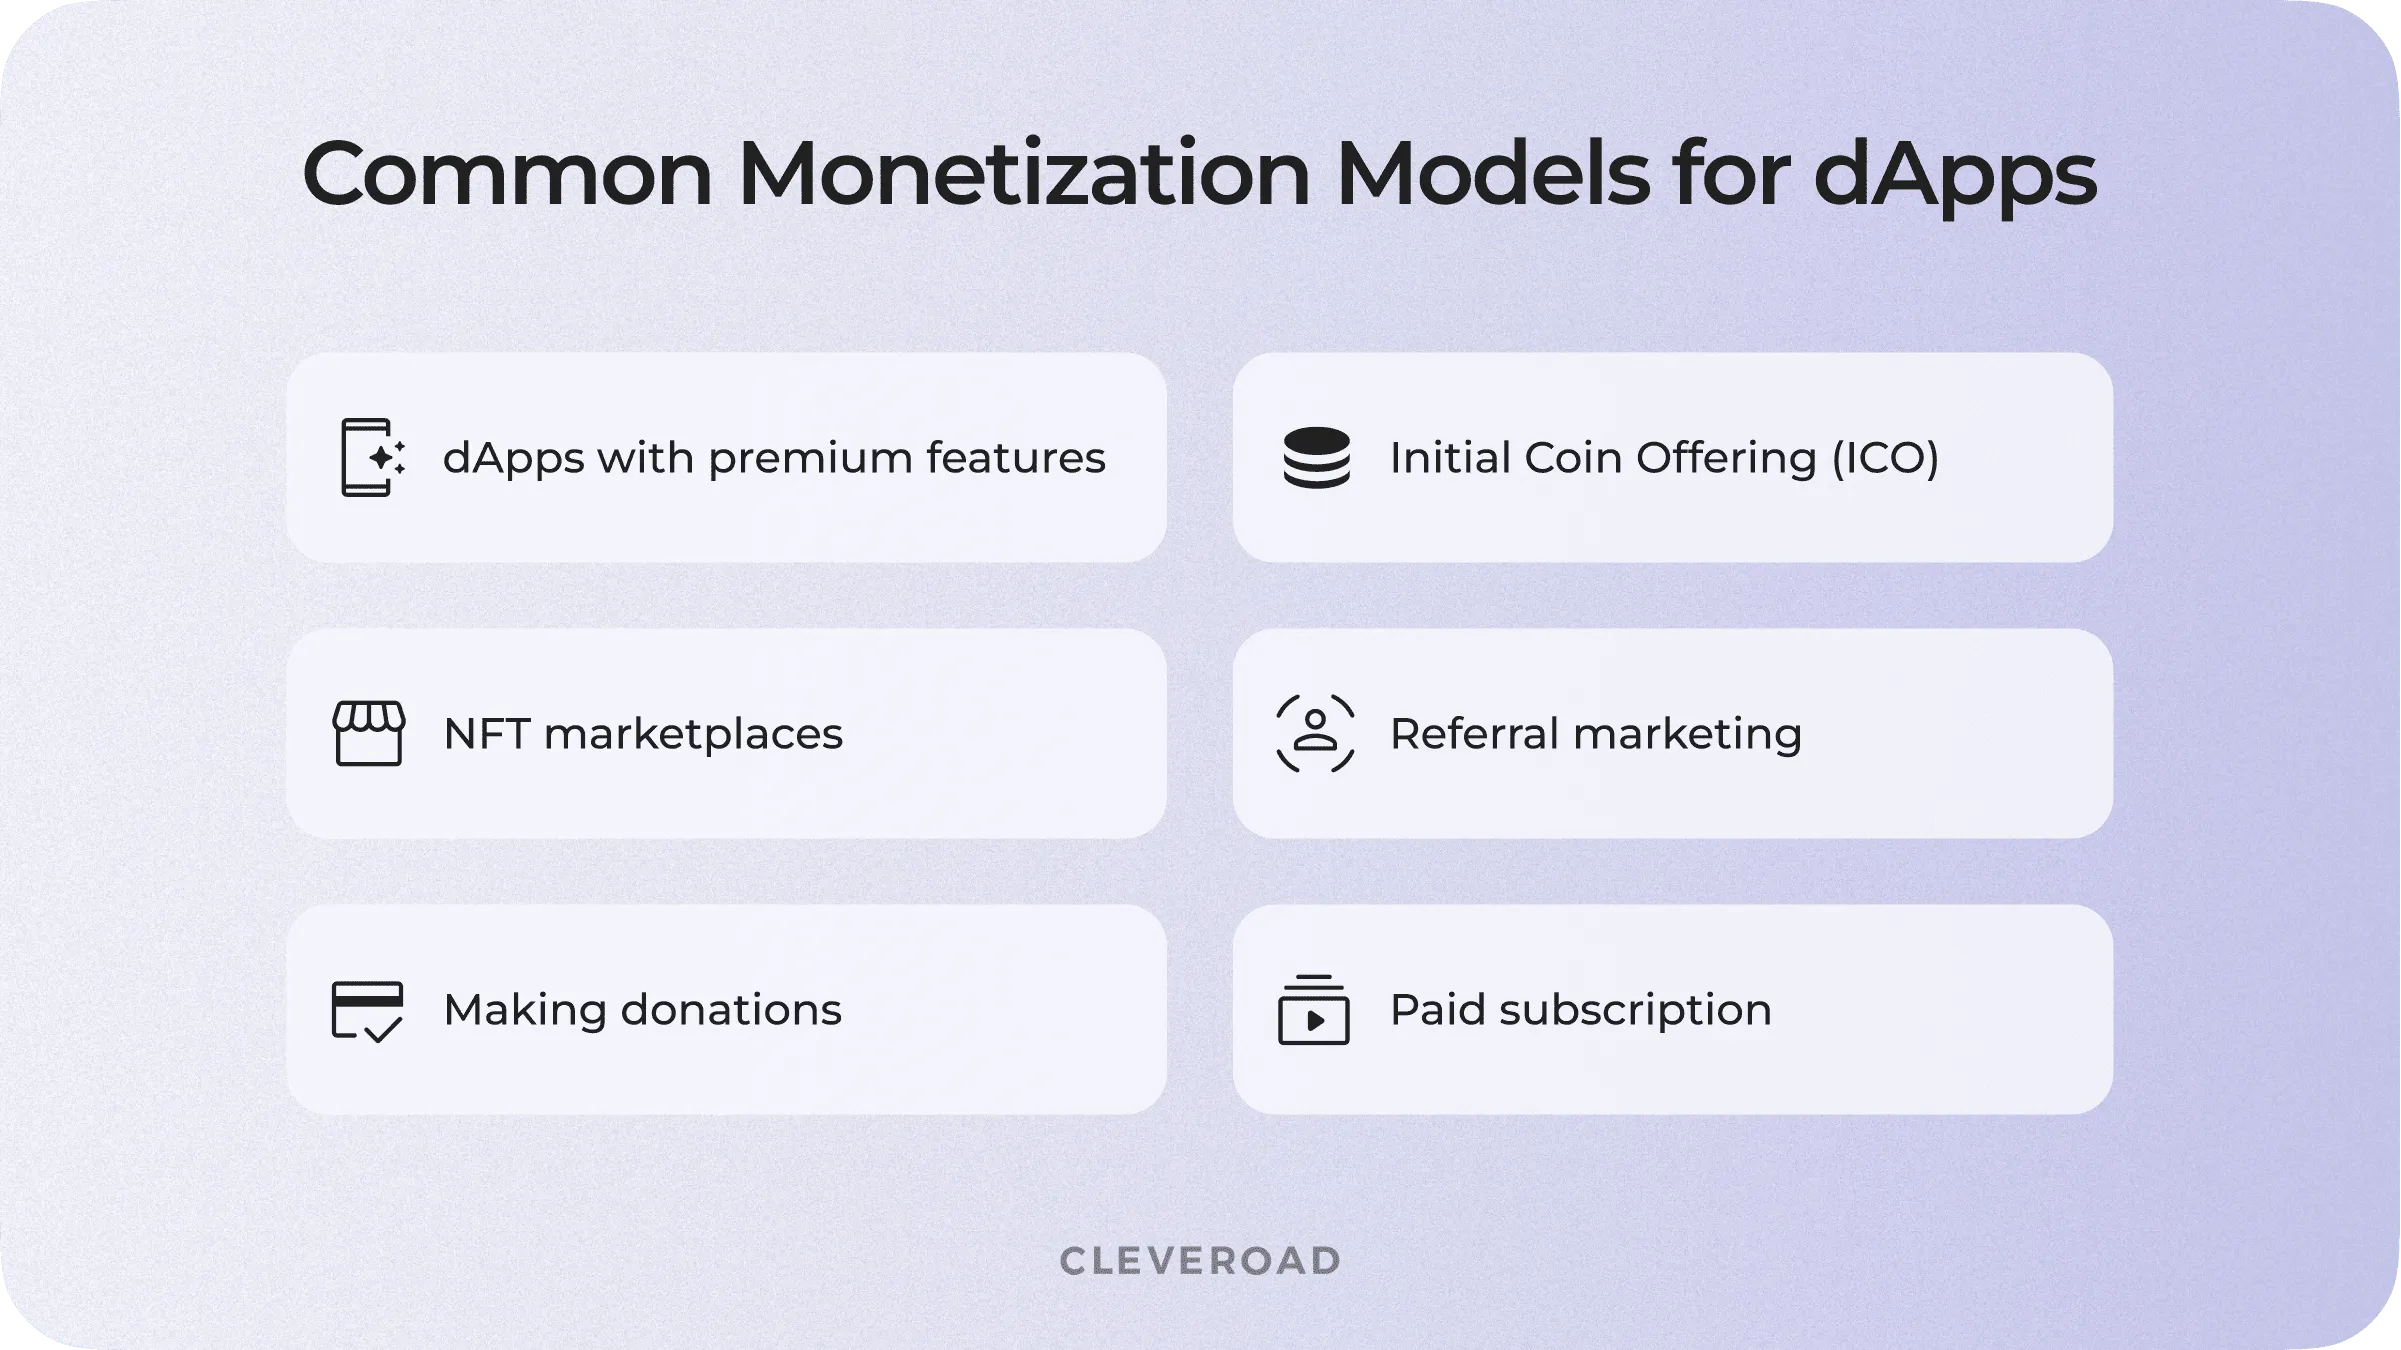 Common monetization models for dApps